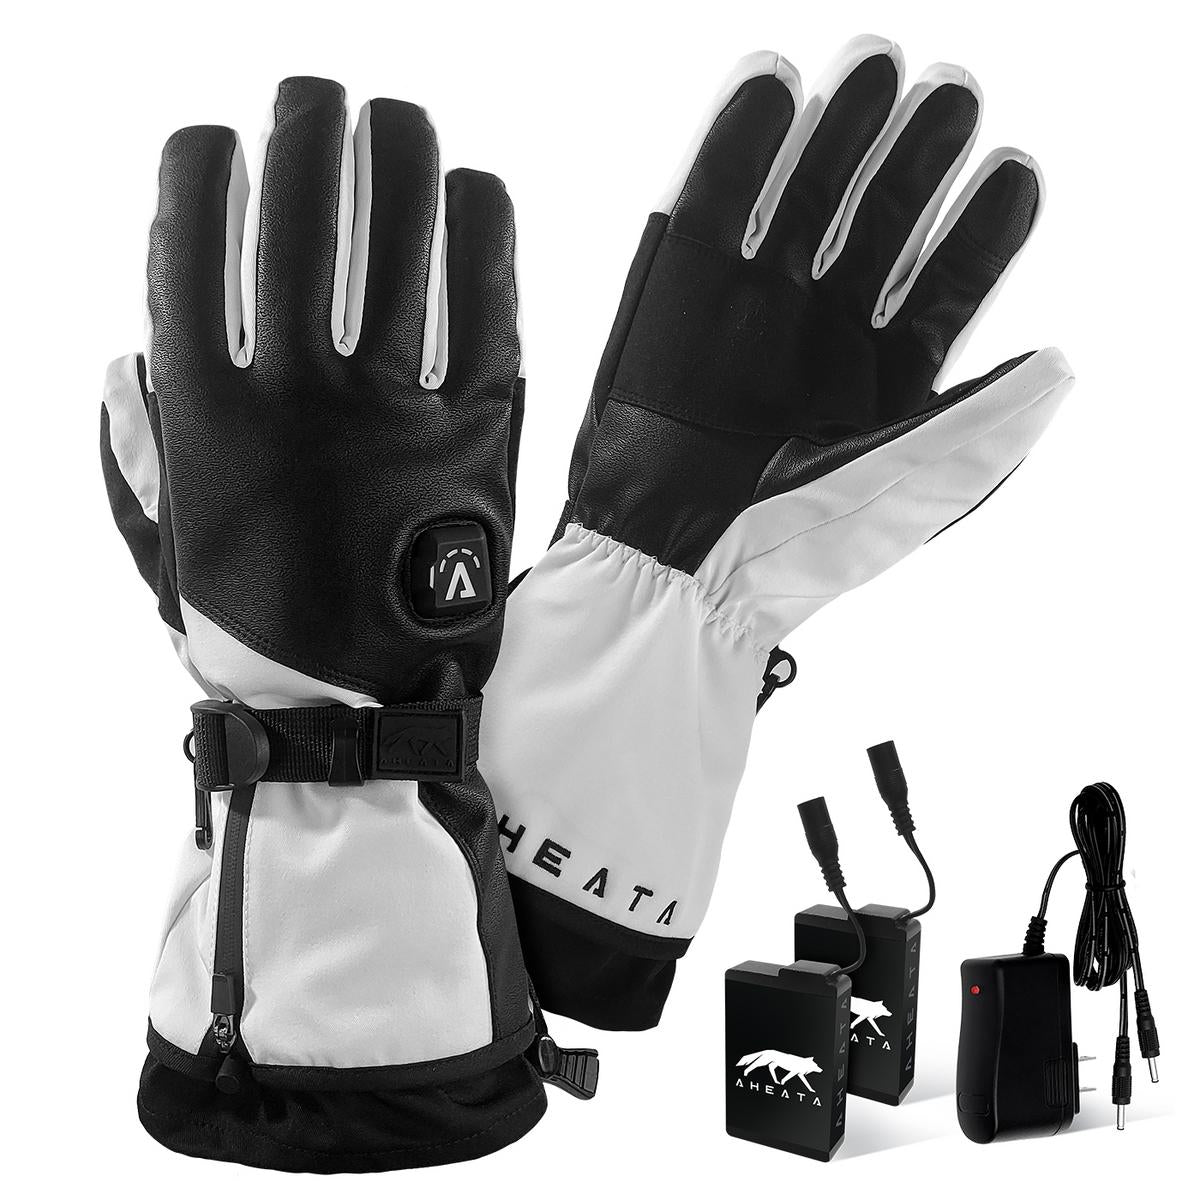 Aheata 7V Battery Heated Gloves - Unisex - Back